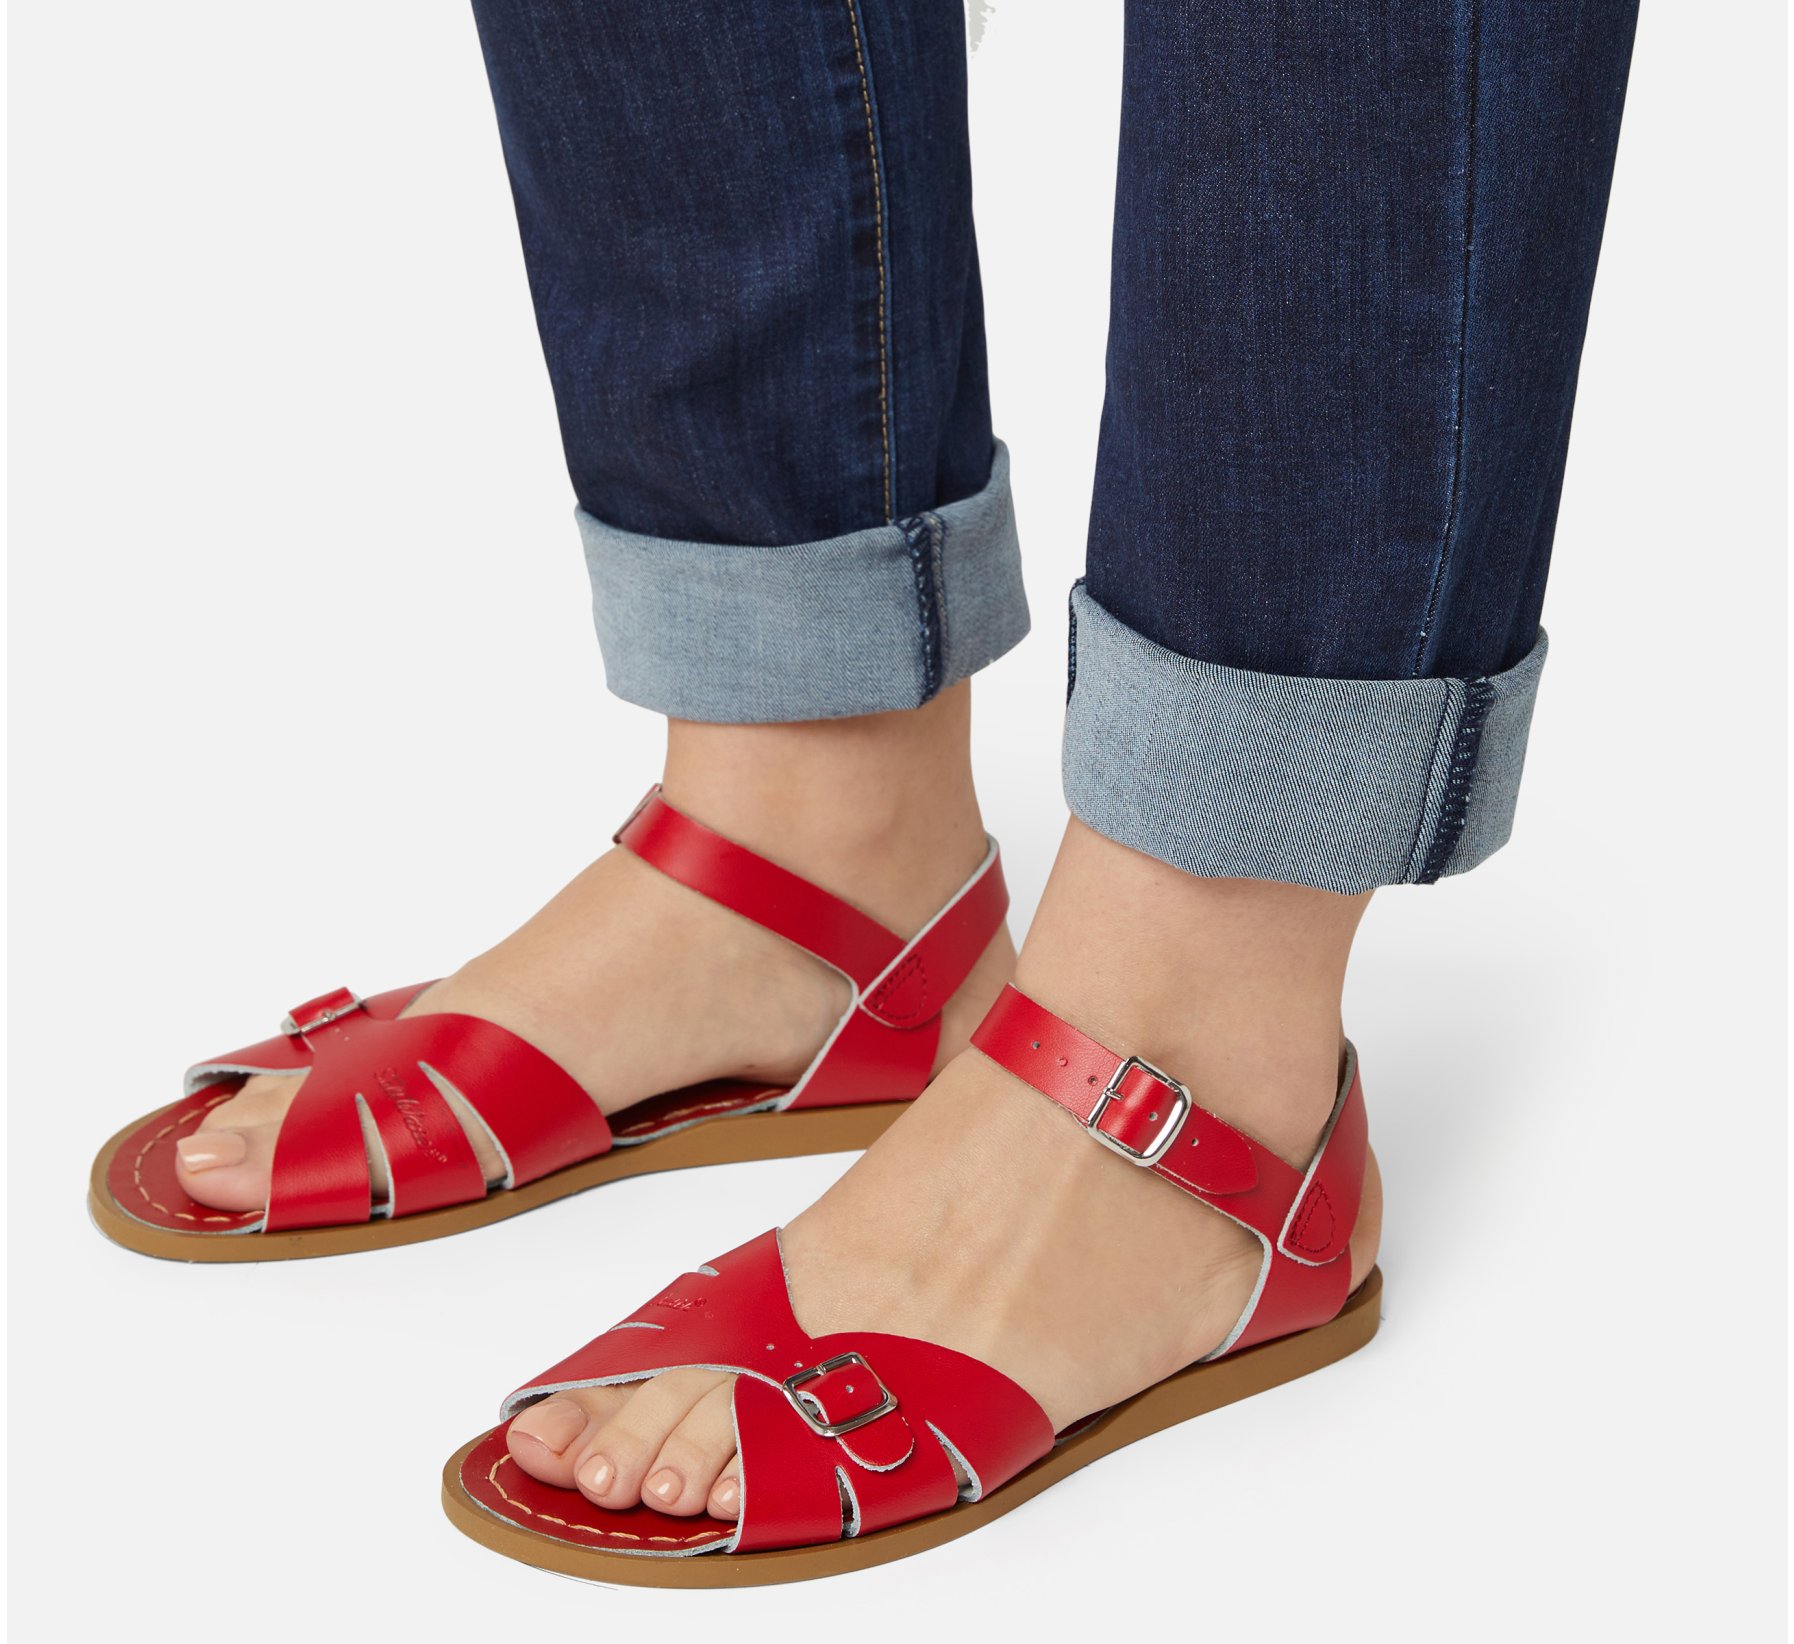 Classic Red Sandal - Salt Water Sandals